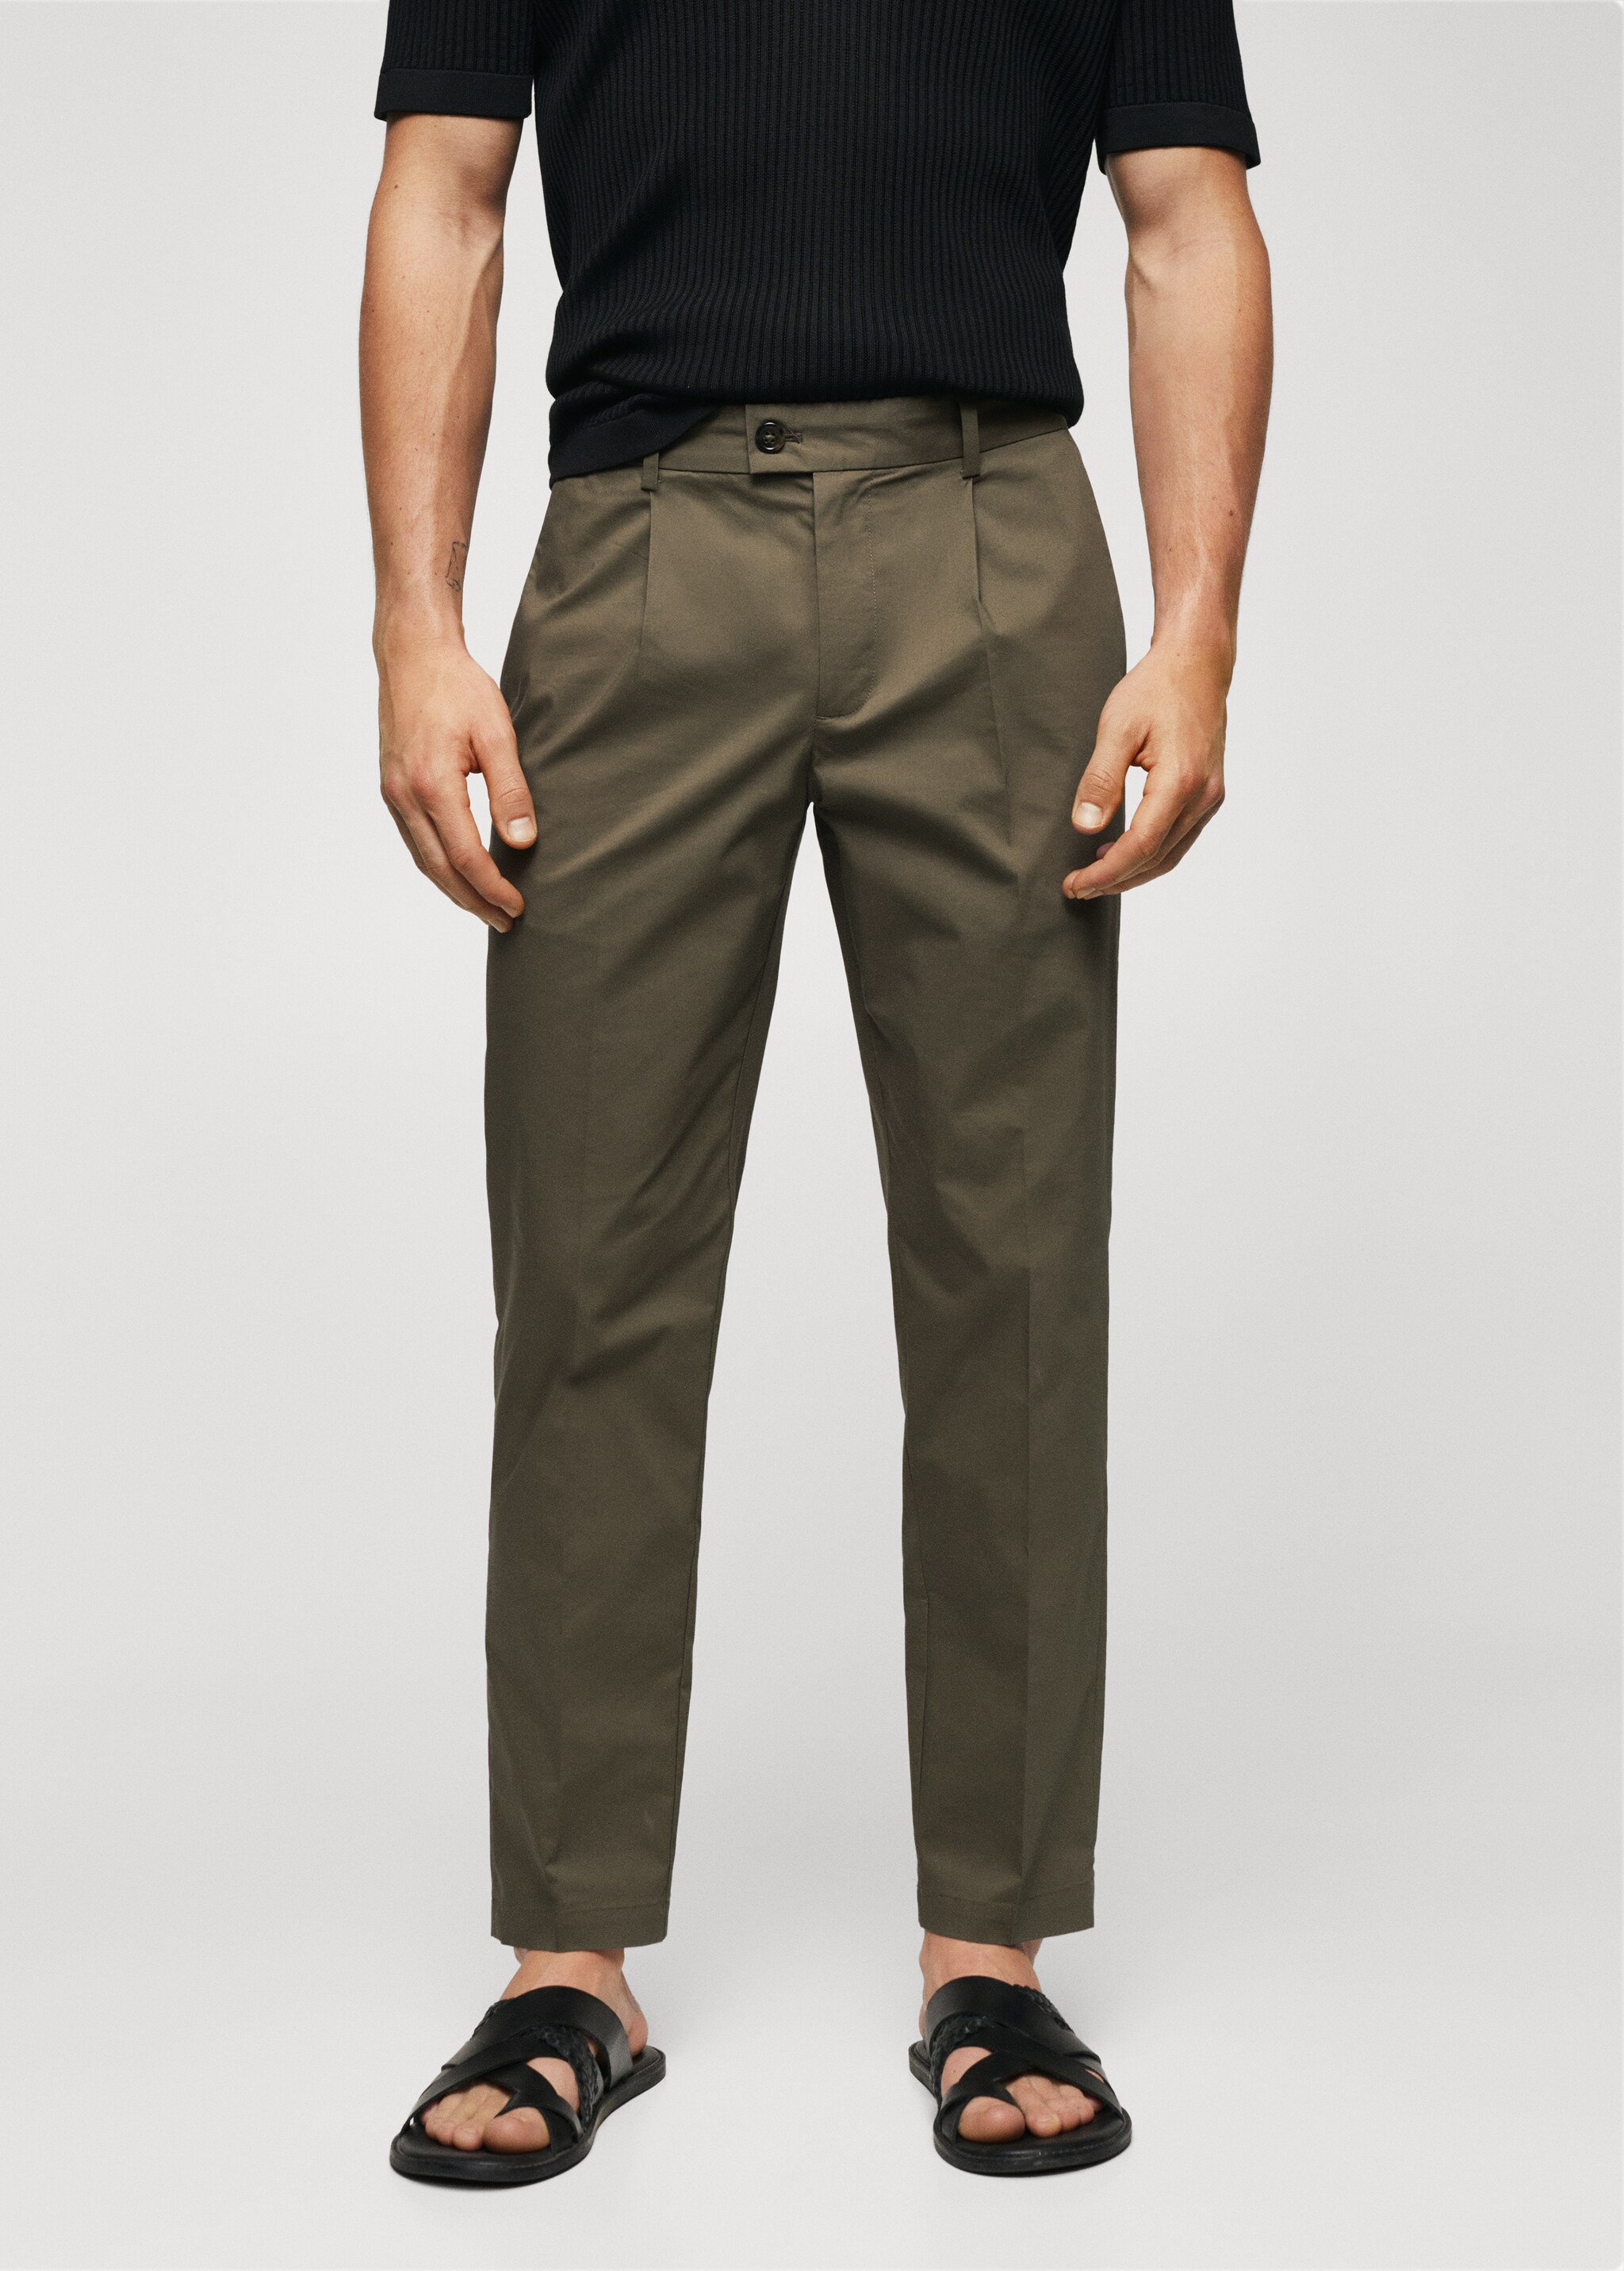 Cotton pleated trousers - Medium plane